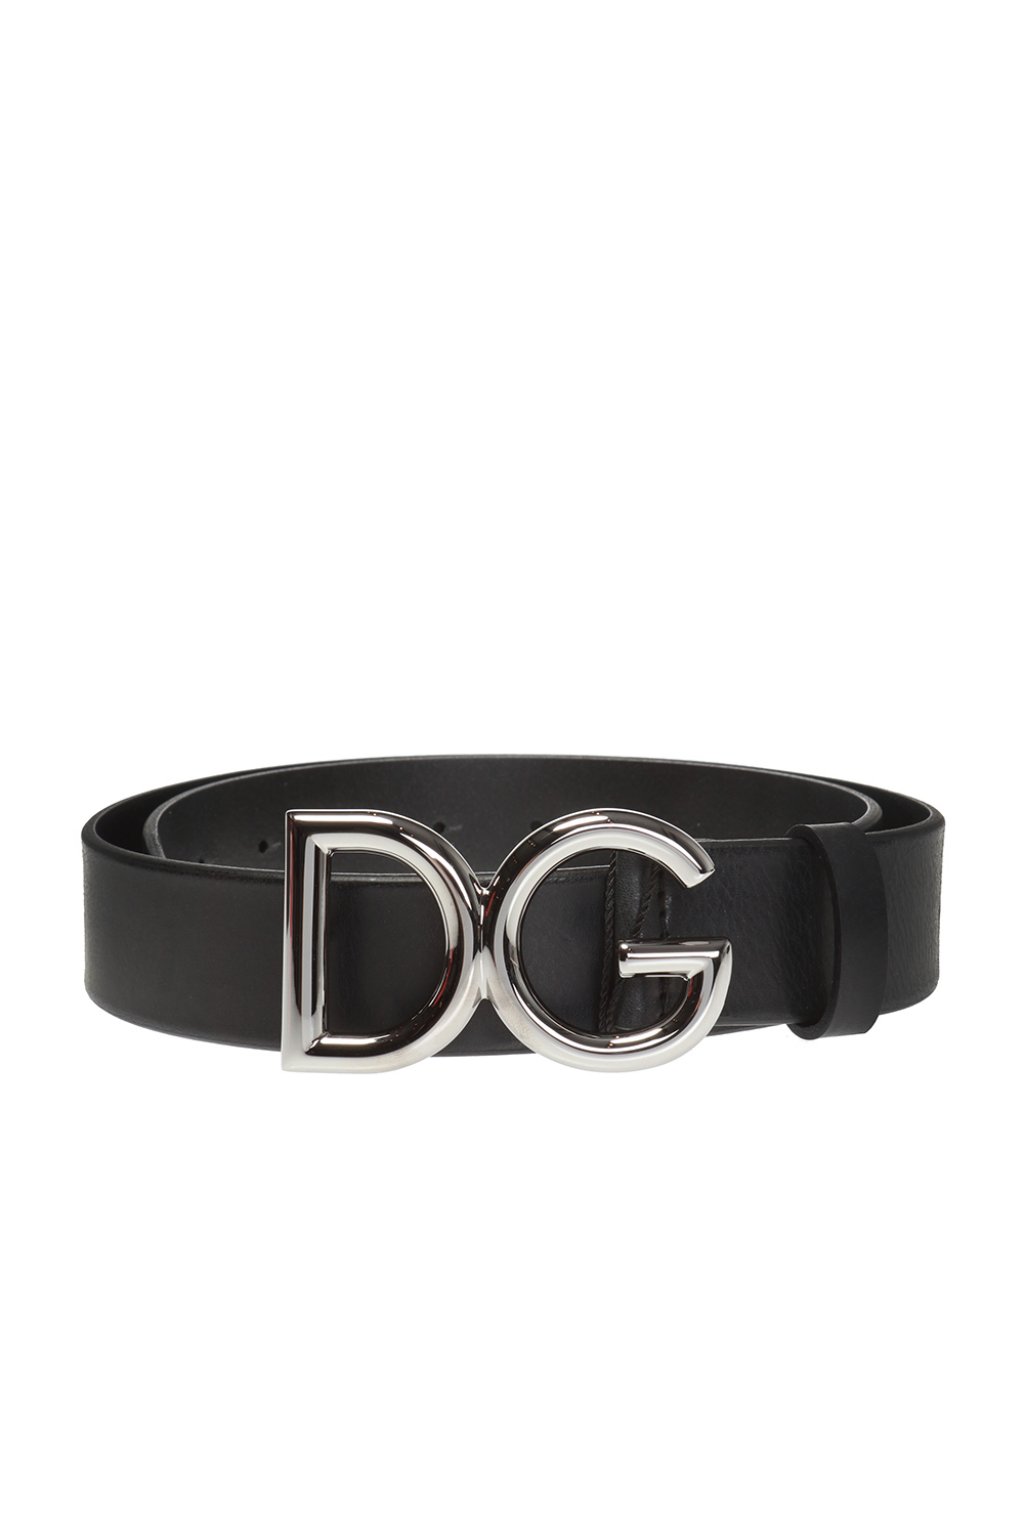 Dolce & Gabbana Logo buckle belt | Men's Accessories | Vitkac